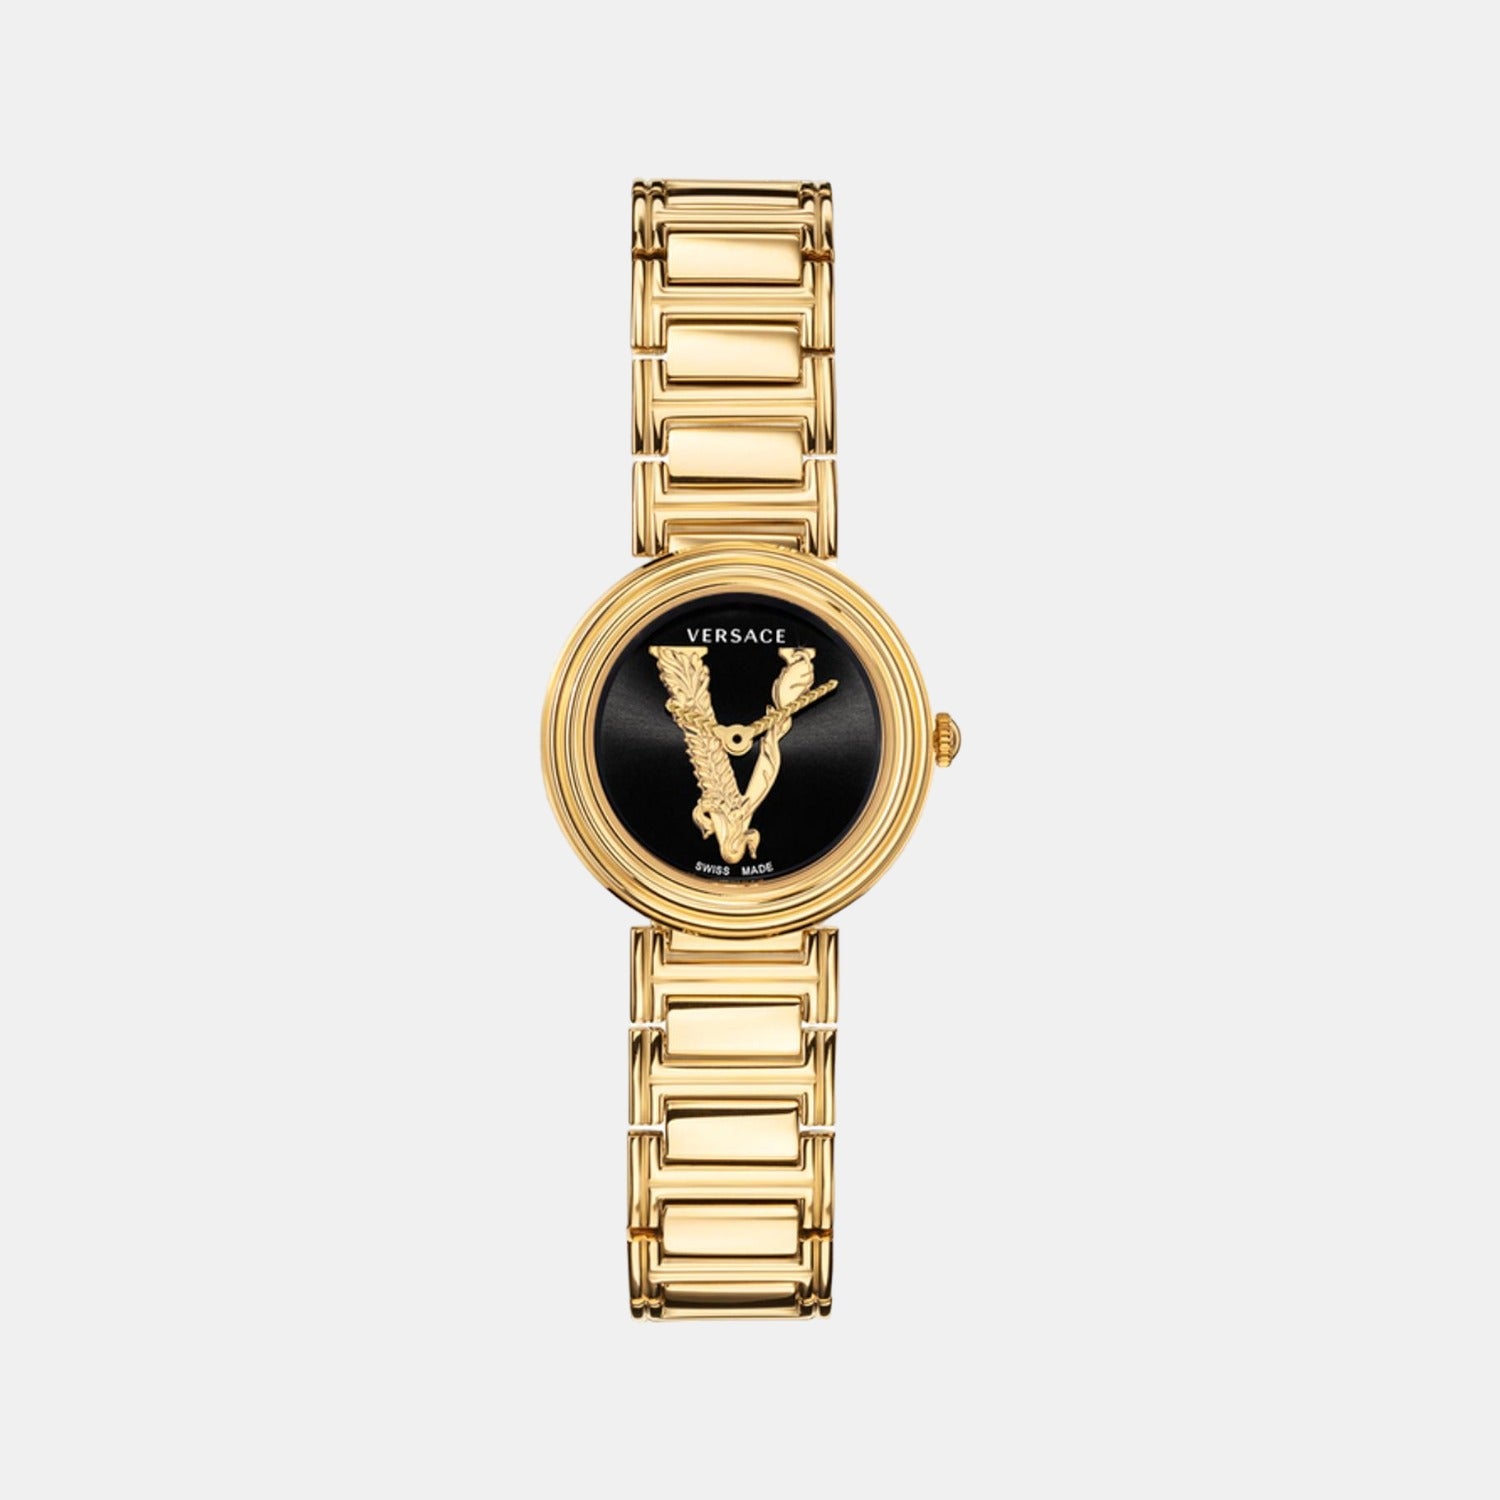 5pcs/set Women's Watch Baroque Rhinestone Quartz Watch Vintage Analog  Bangle Cuff Wrist Watch & Jewelry Set, Gift For Mom Her - AliExpress